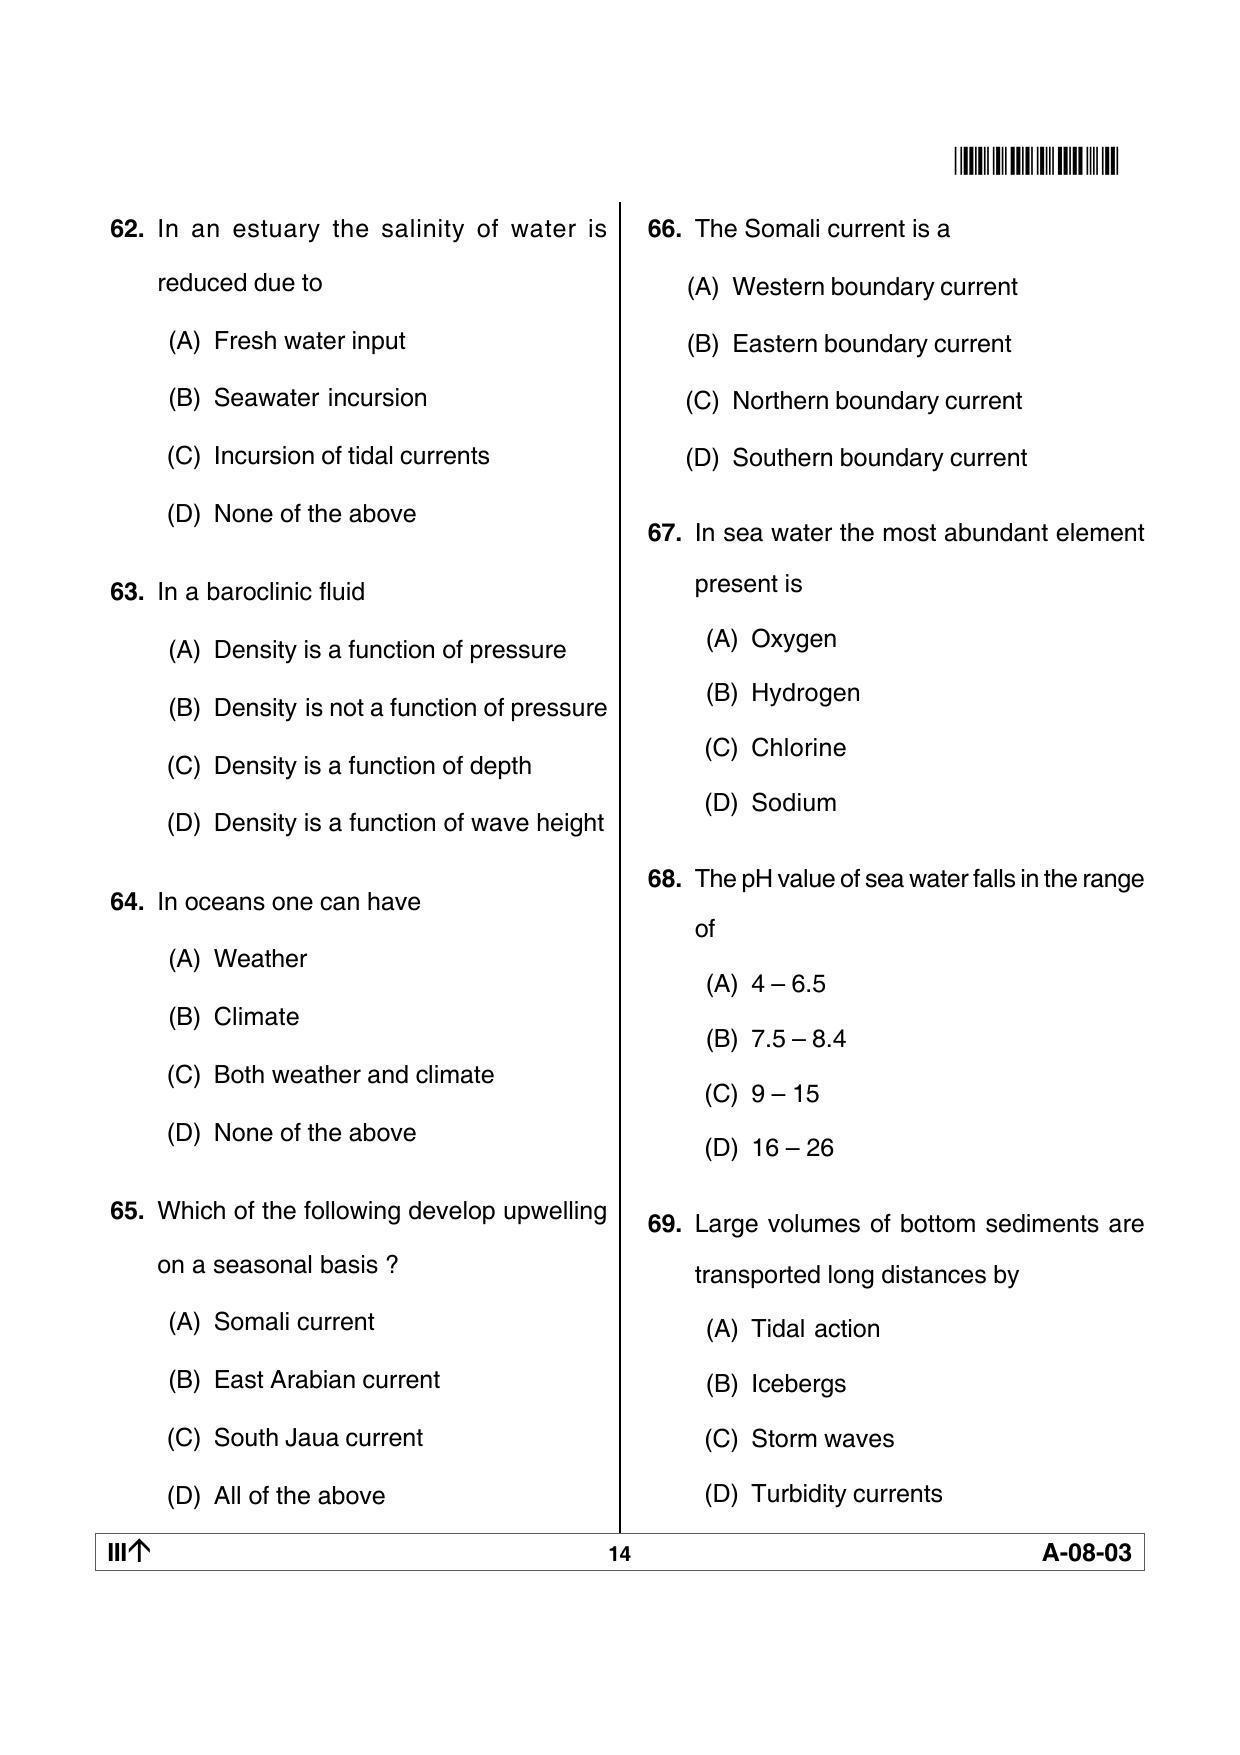 LUVAS Clerk Model Papers - Environment.pdf - Page 13